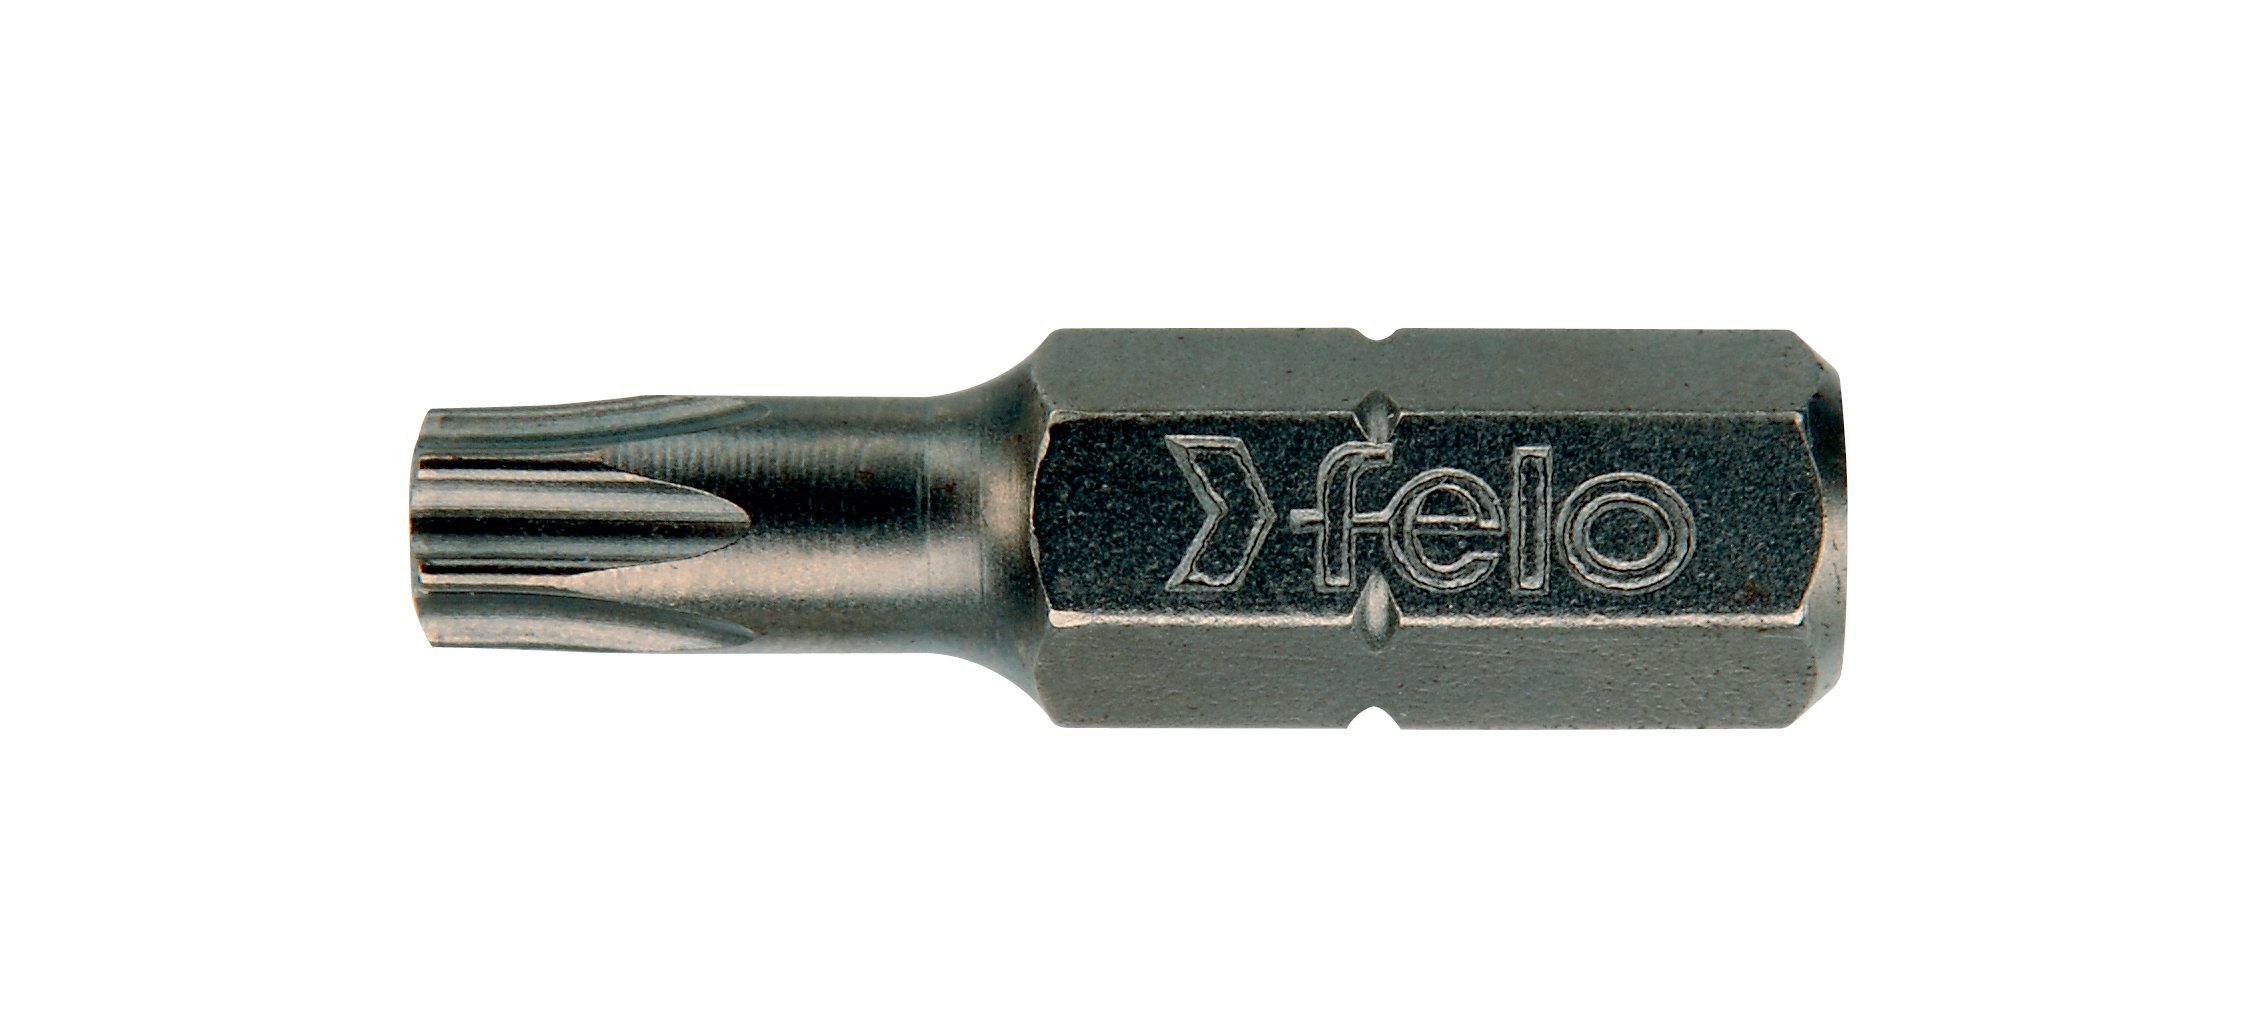 Torx-Bit Felo C Tx x Felo 6,3 10 Bit, 25mm Stück) Industrie (100